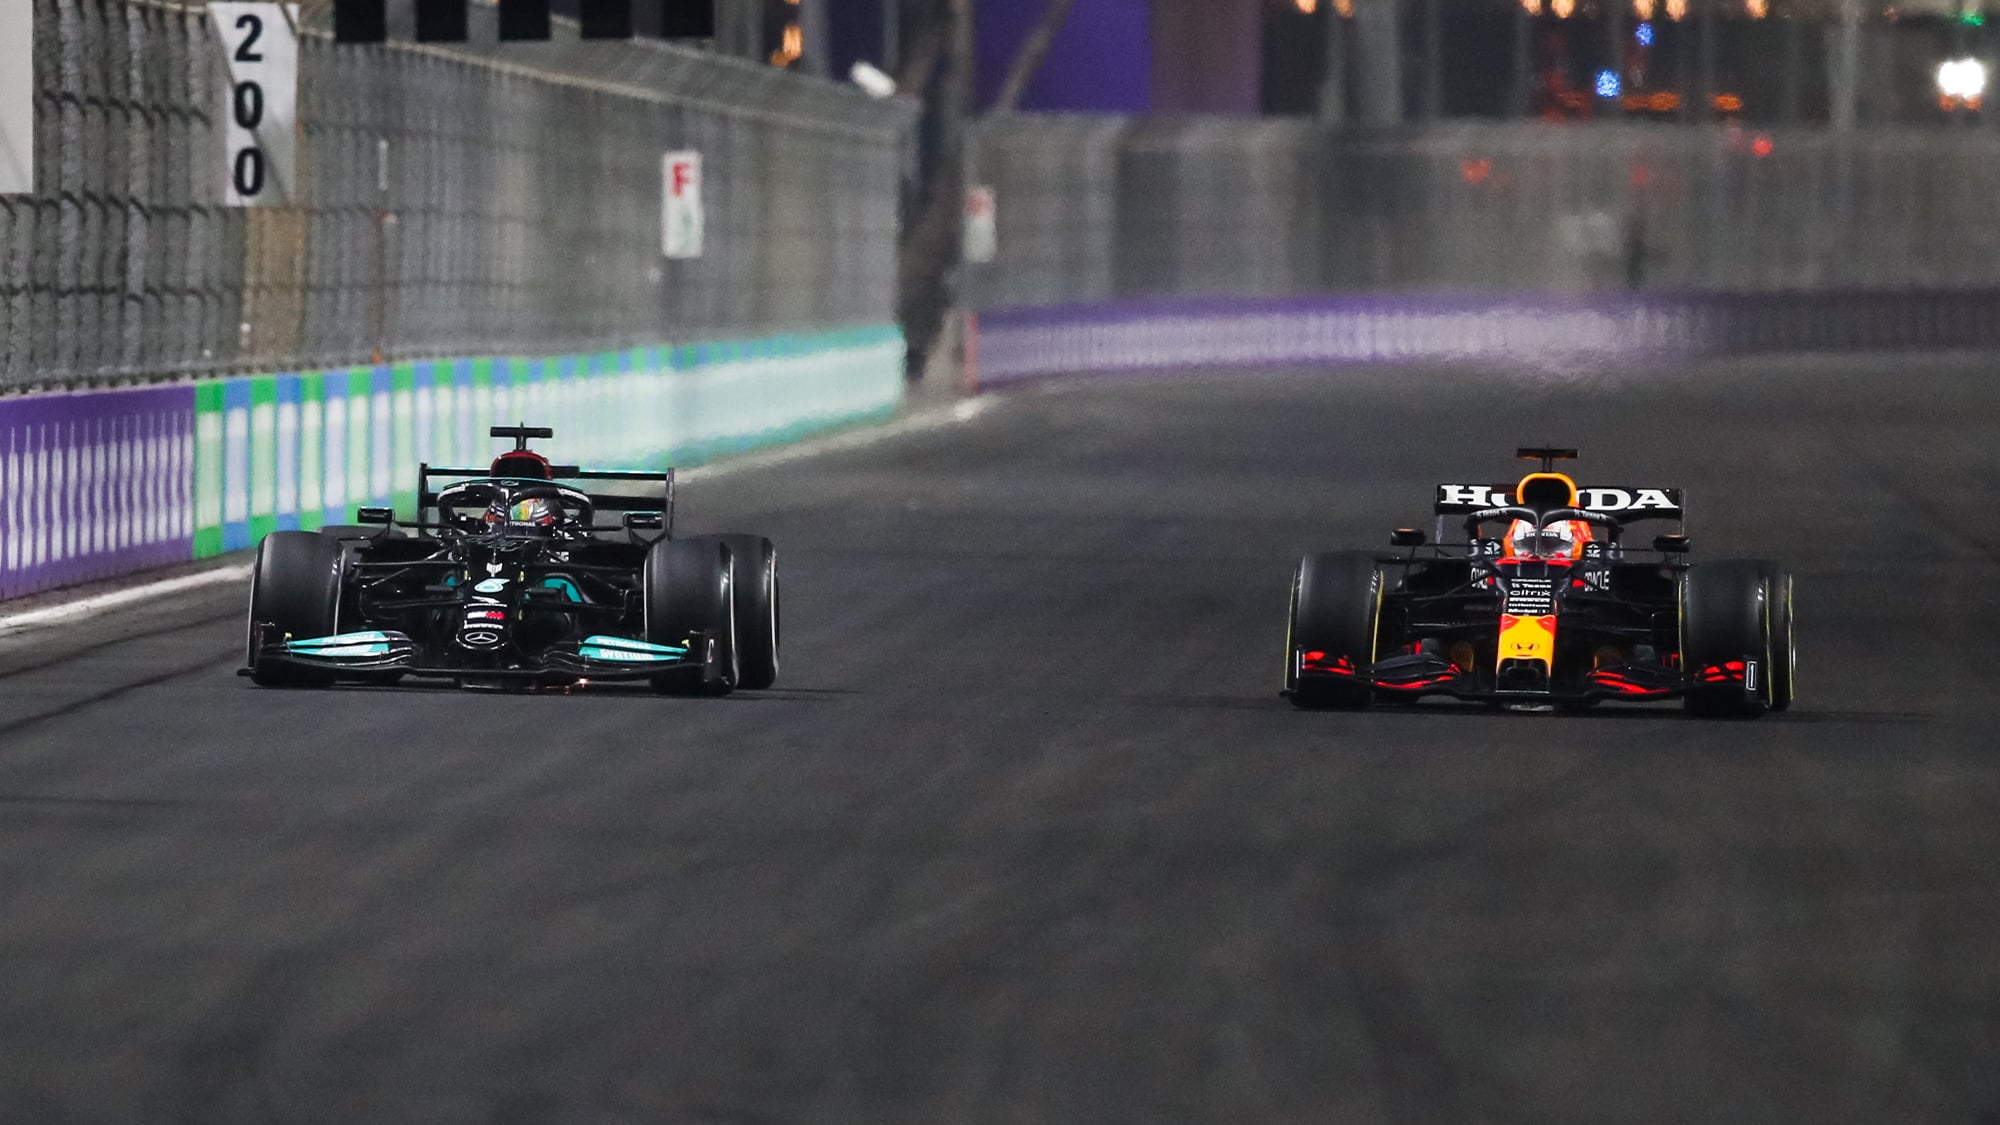 Verstappen vs Hamilton in 2021 the greatest season in F1 history?